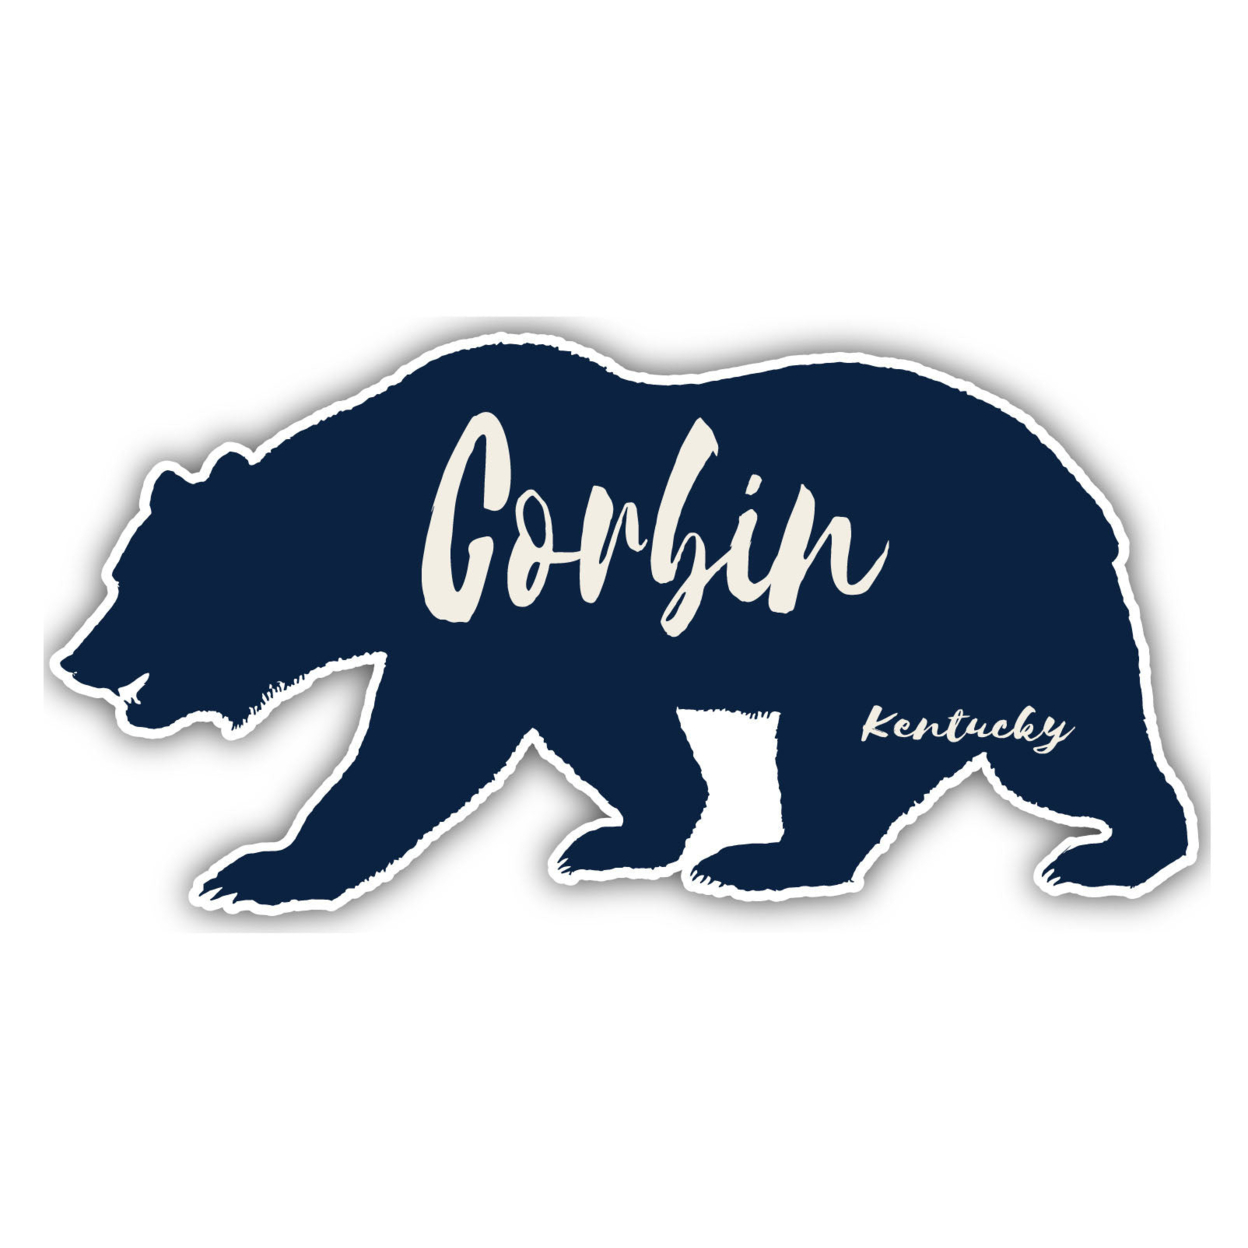 Corbin Kentucky Souvenir Decorative Stickers (Choose Theme And Size) - Single Unit, 6-Inch, Tent